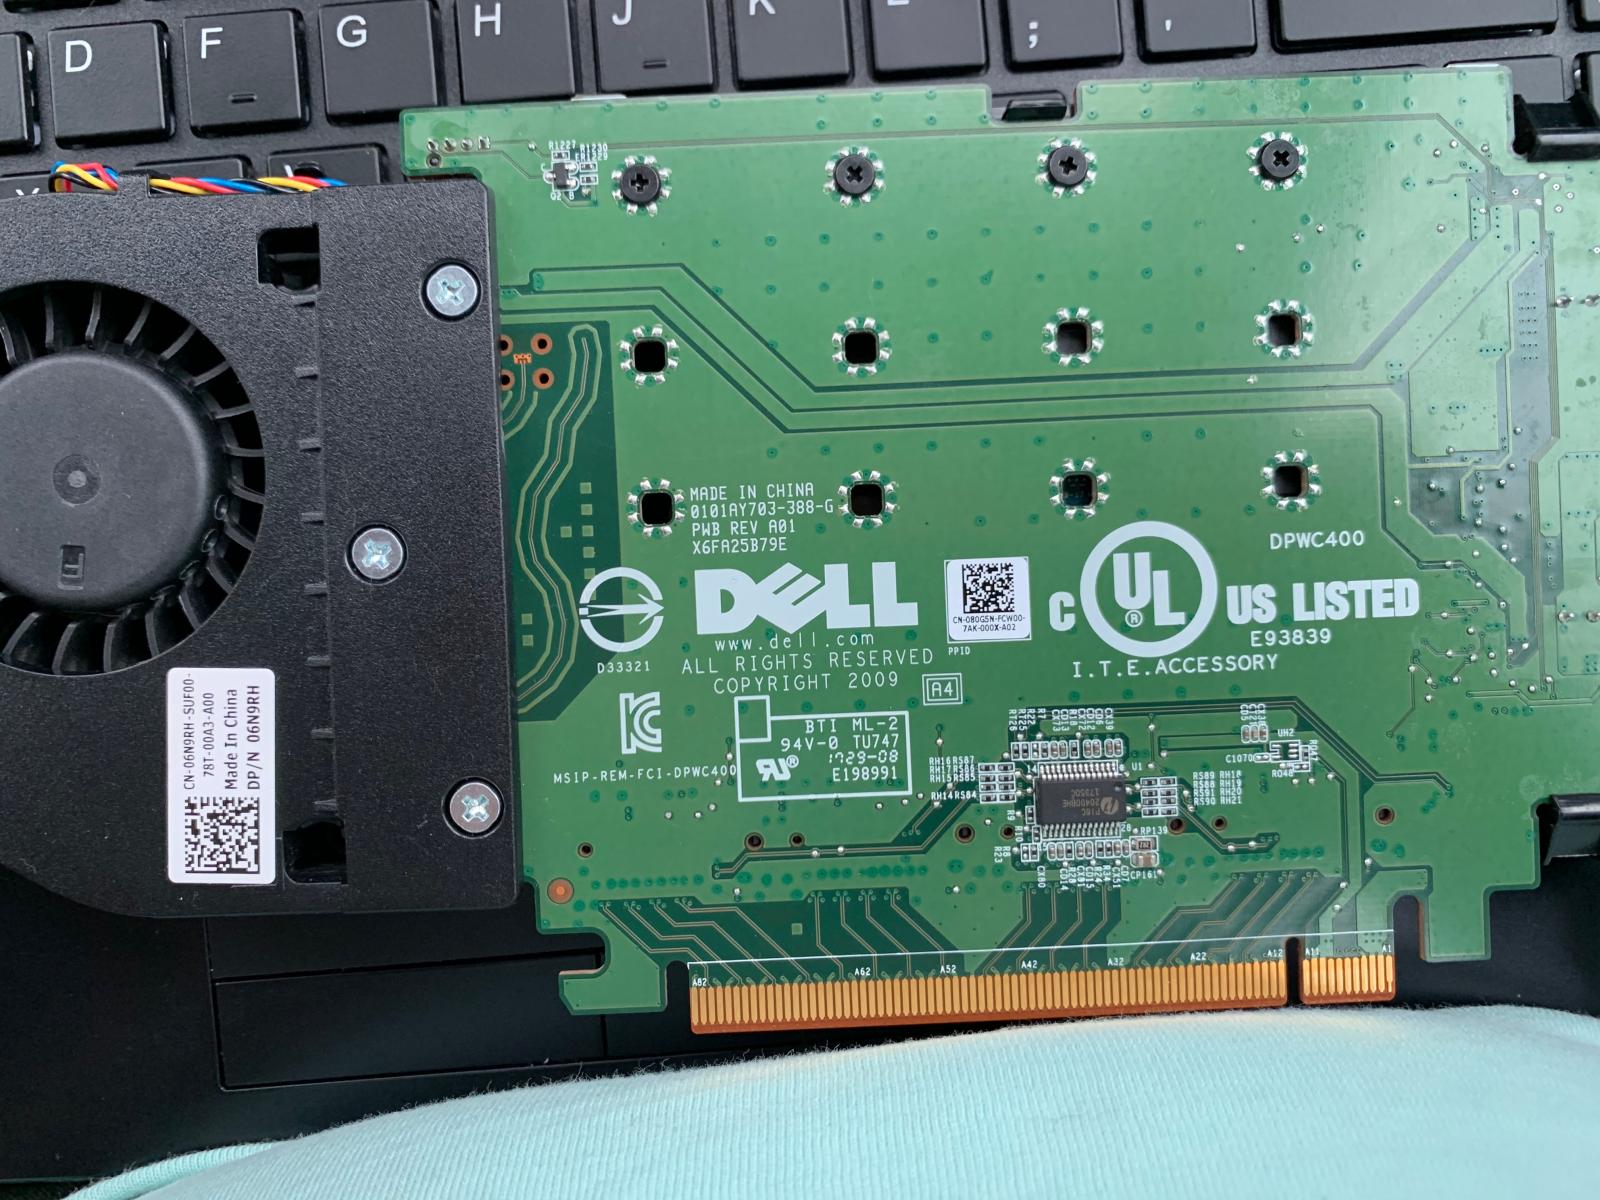 Dell DPWC400 Ultra-Speed Drive Quad NVMe M.2 PCIe x16 Card ...